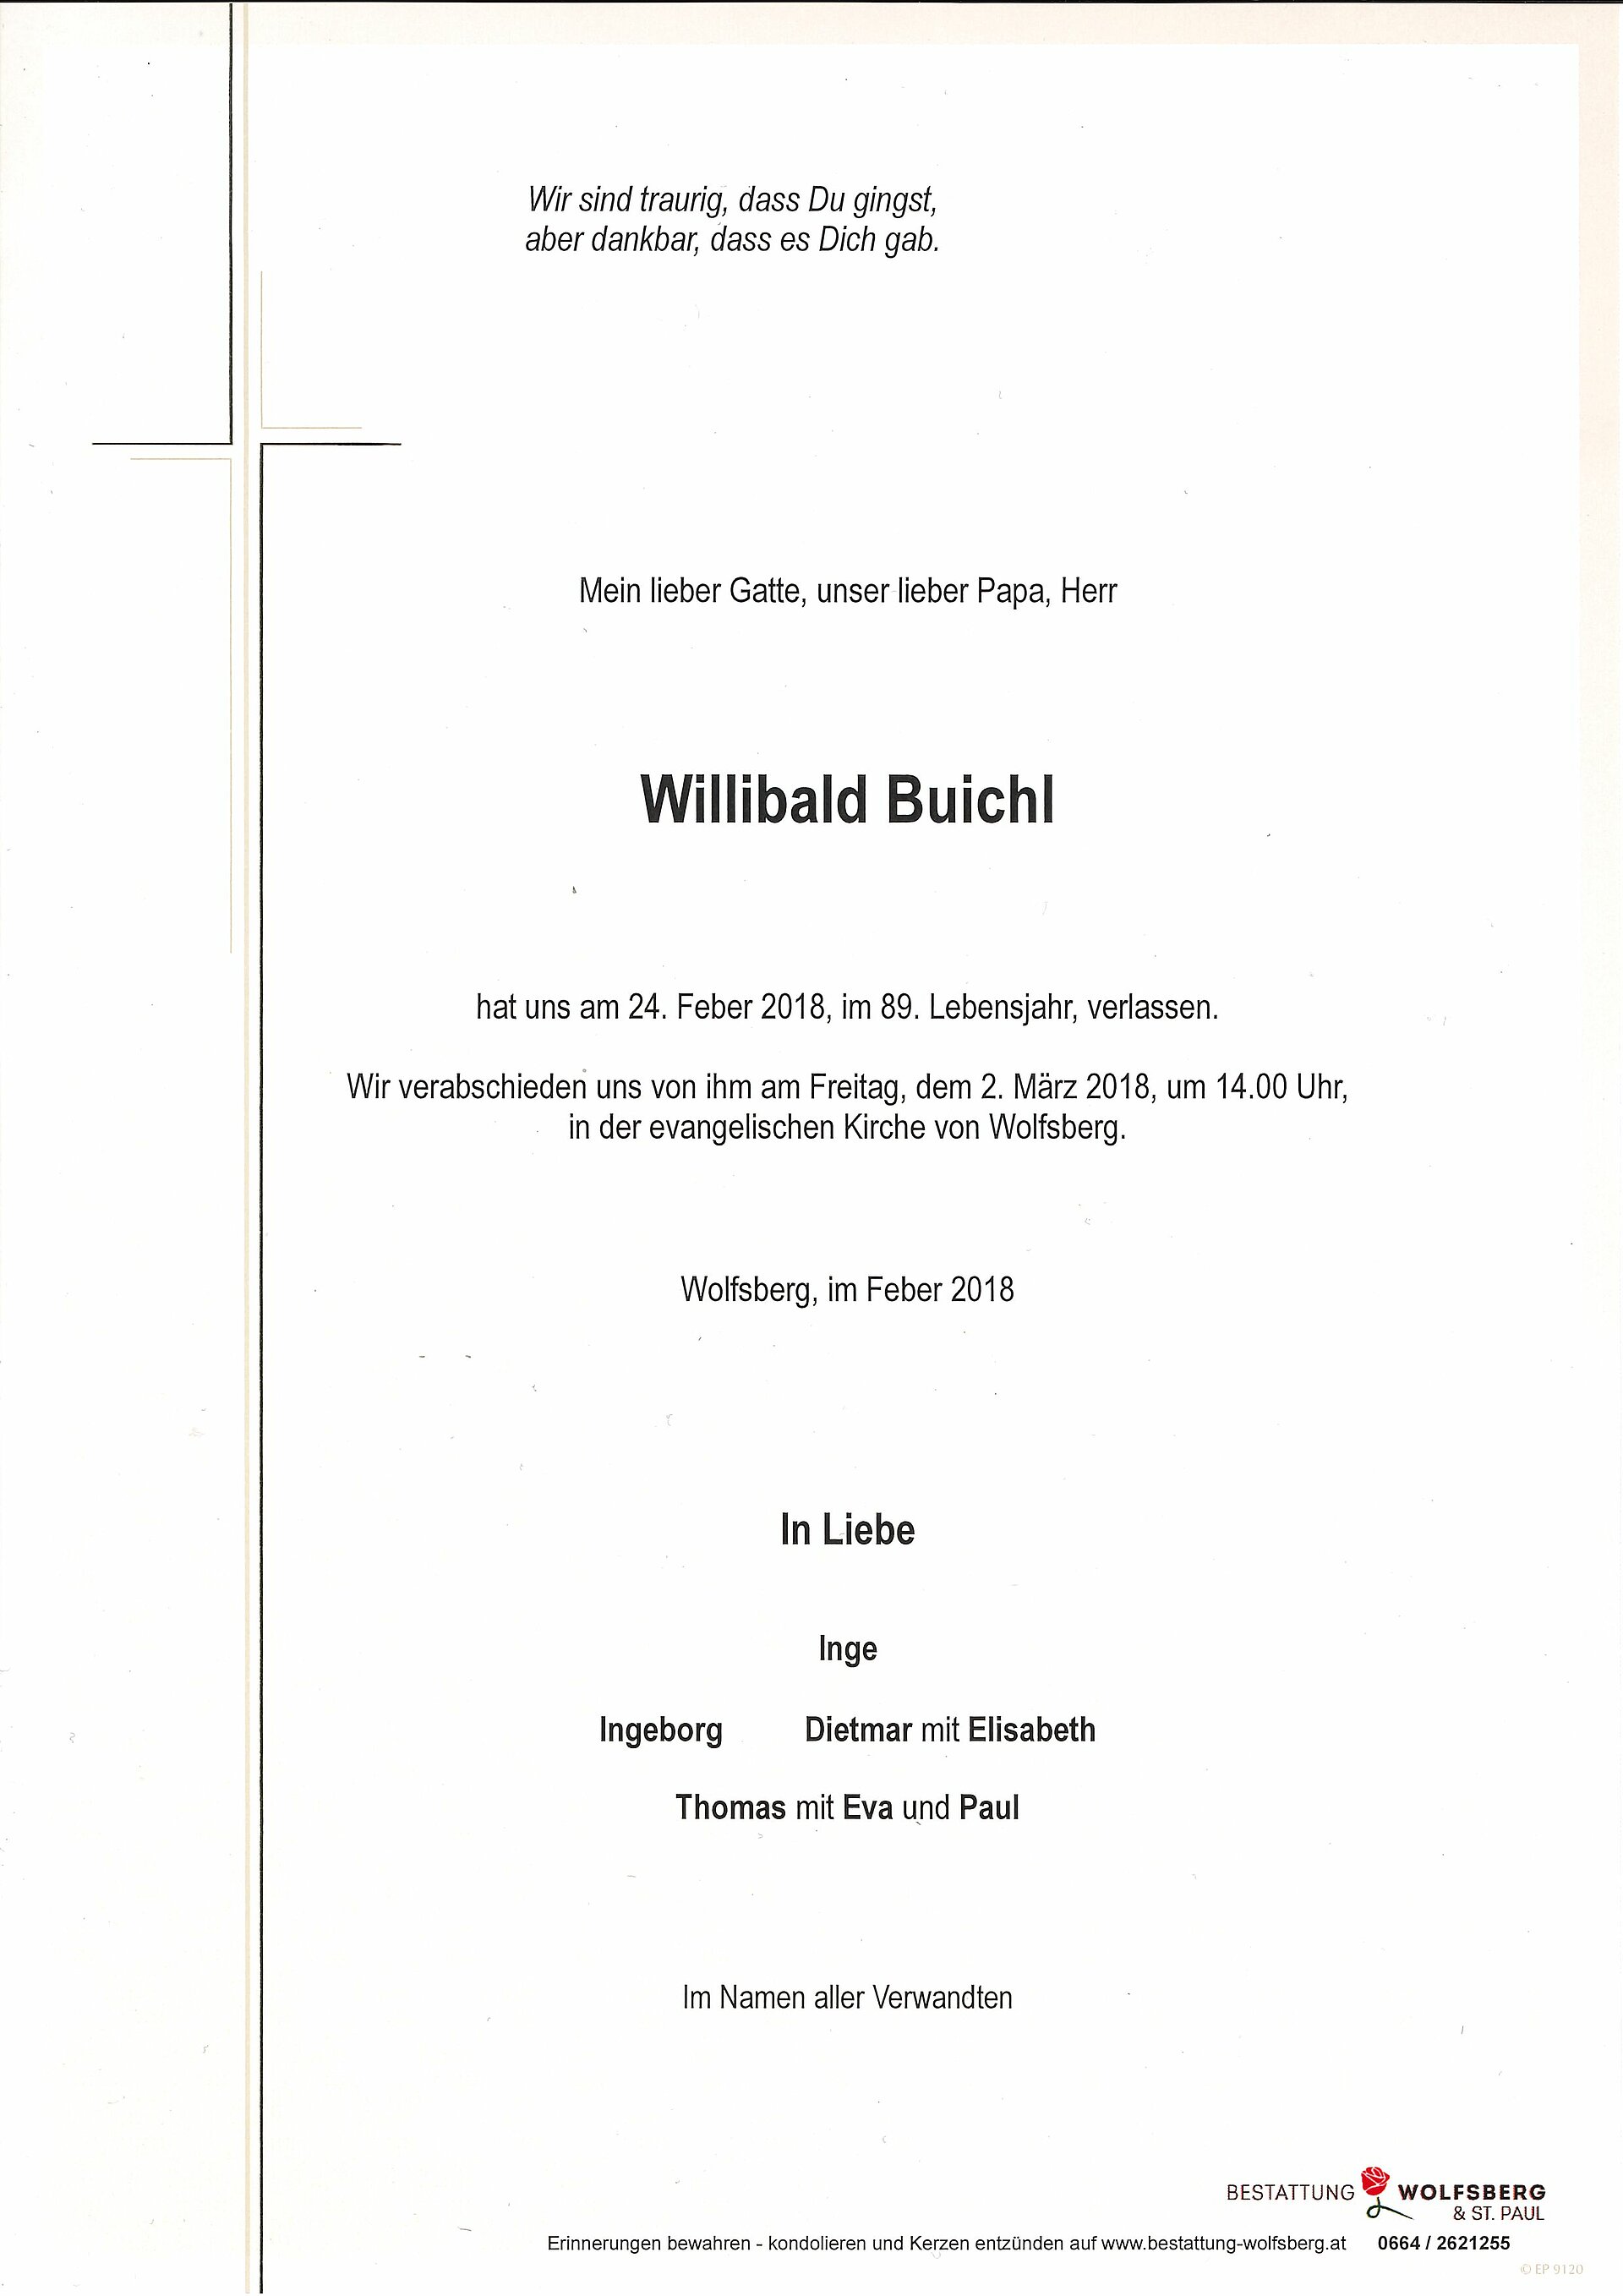 Buichl-Willibald.jpg